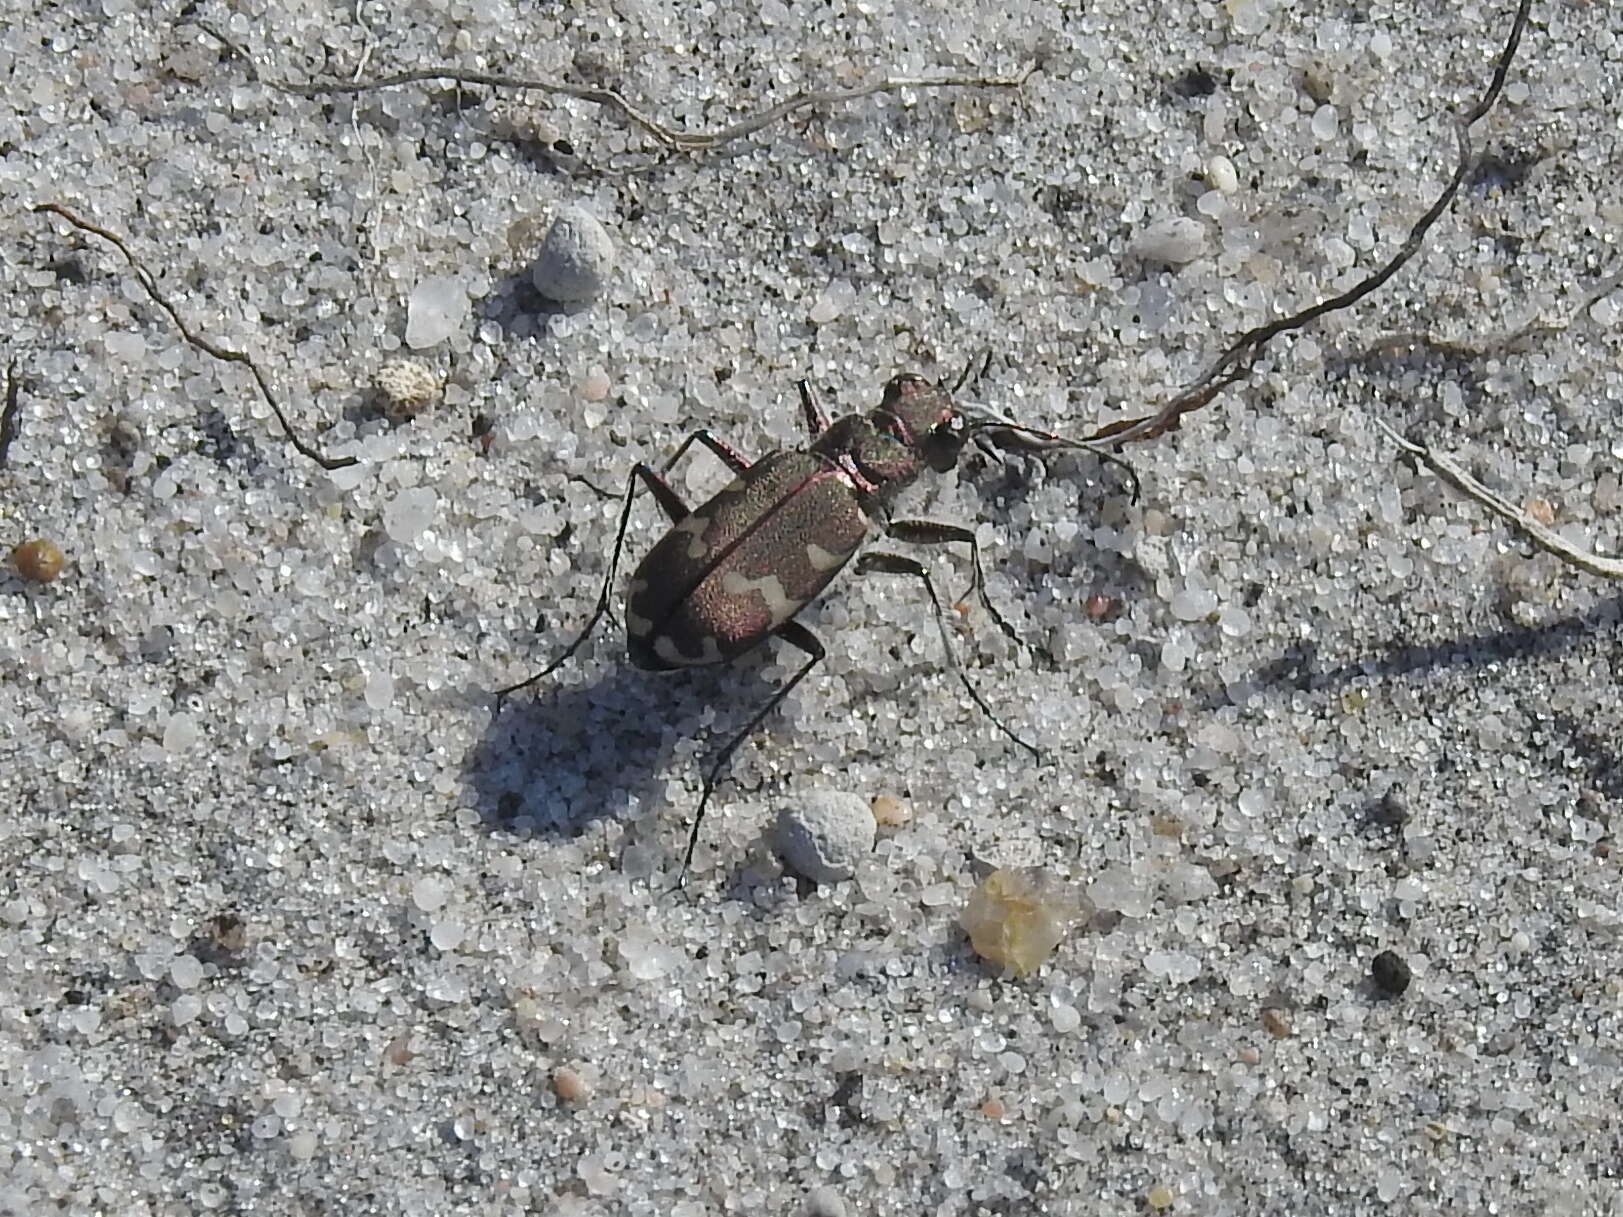 Image of Northern dune tiger beetle